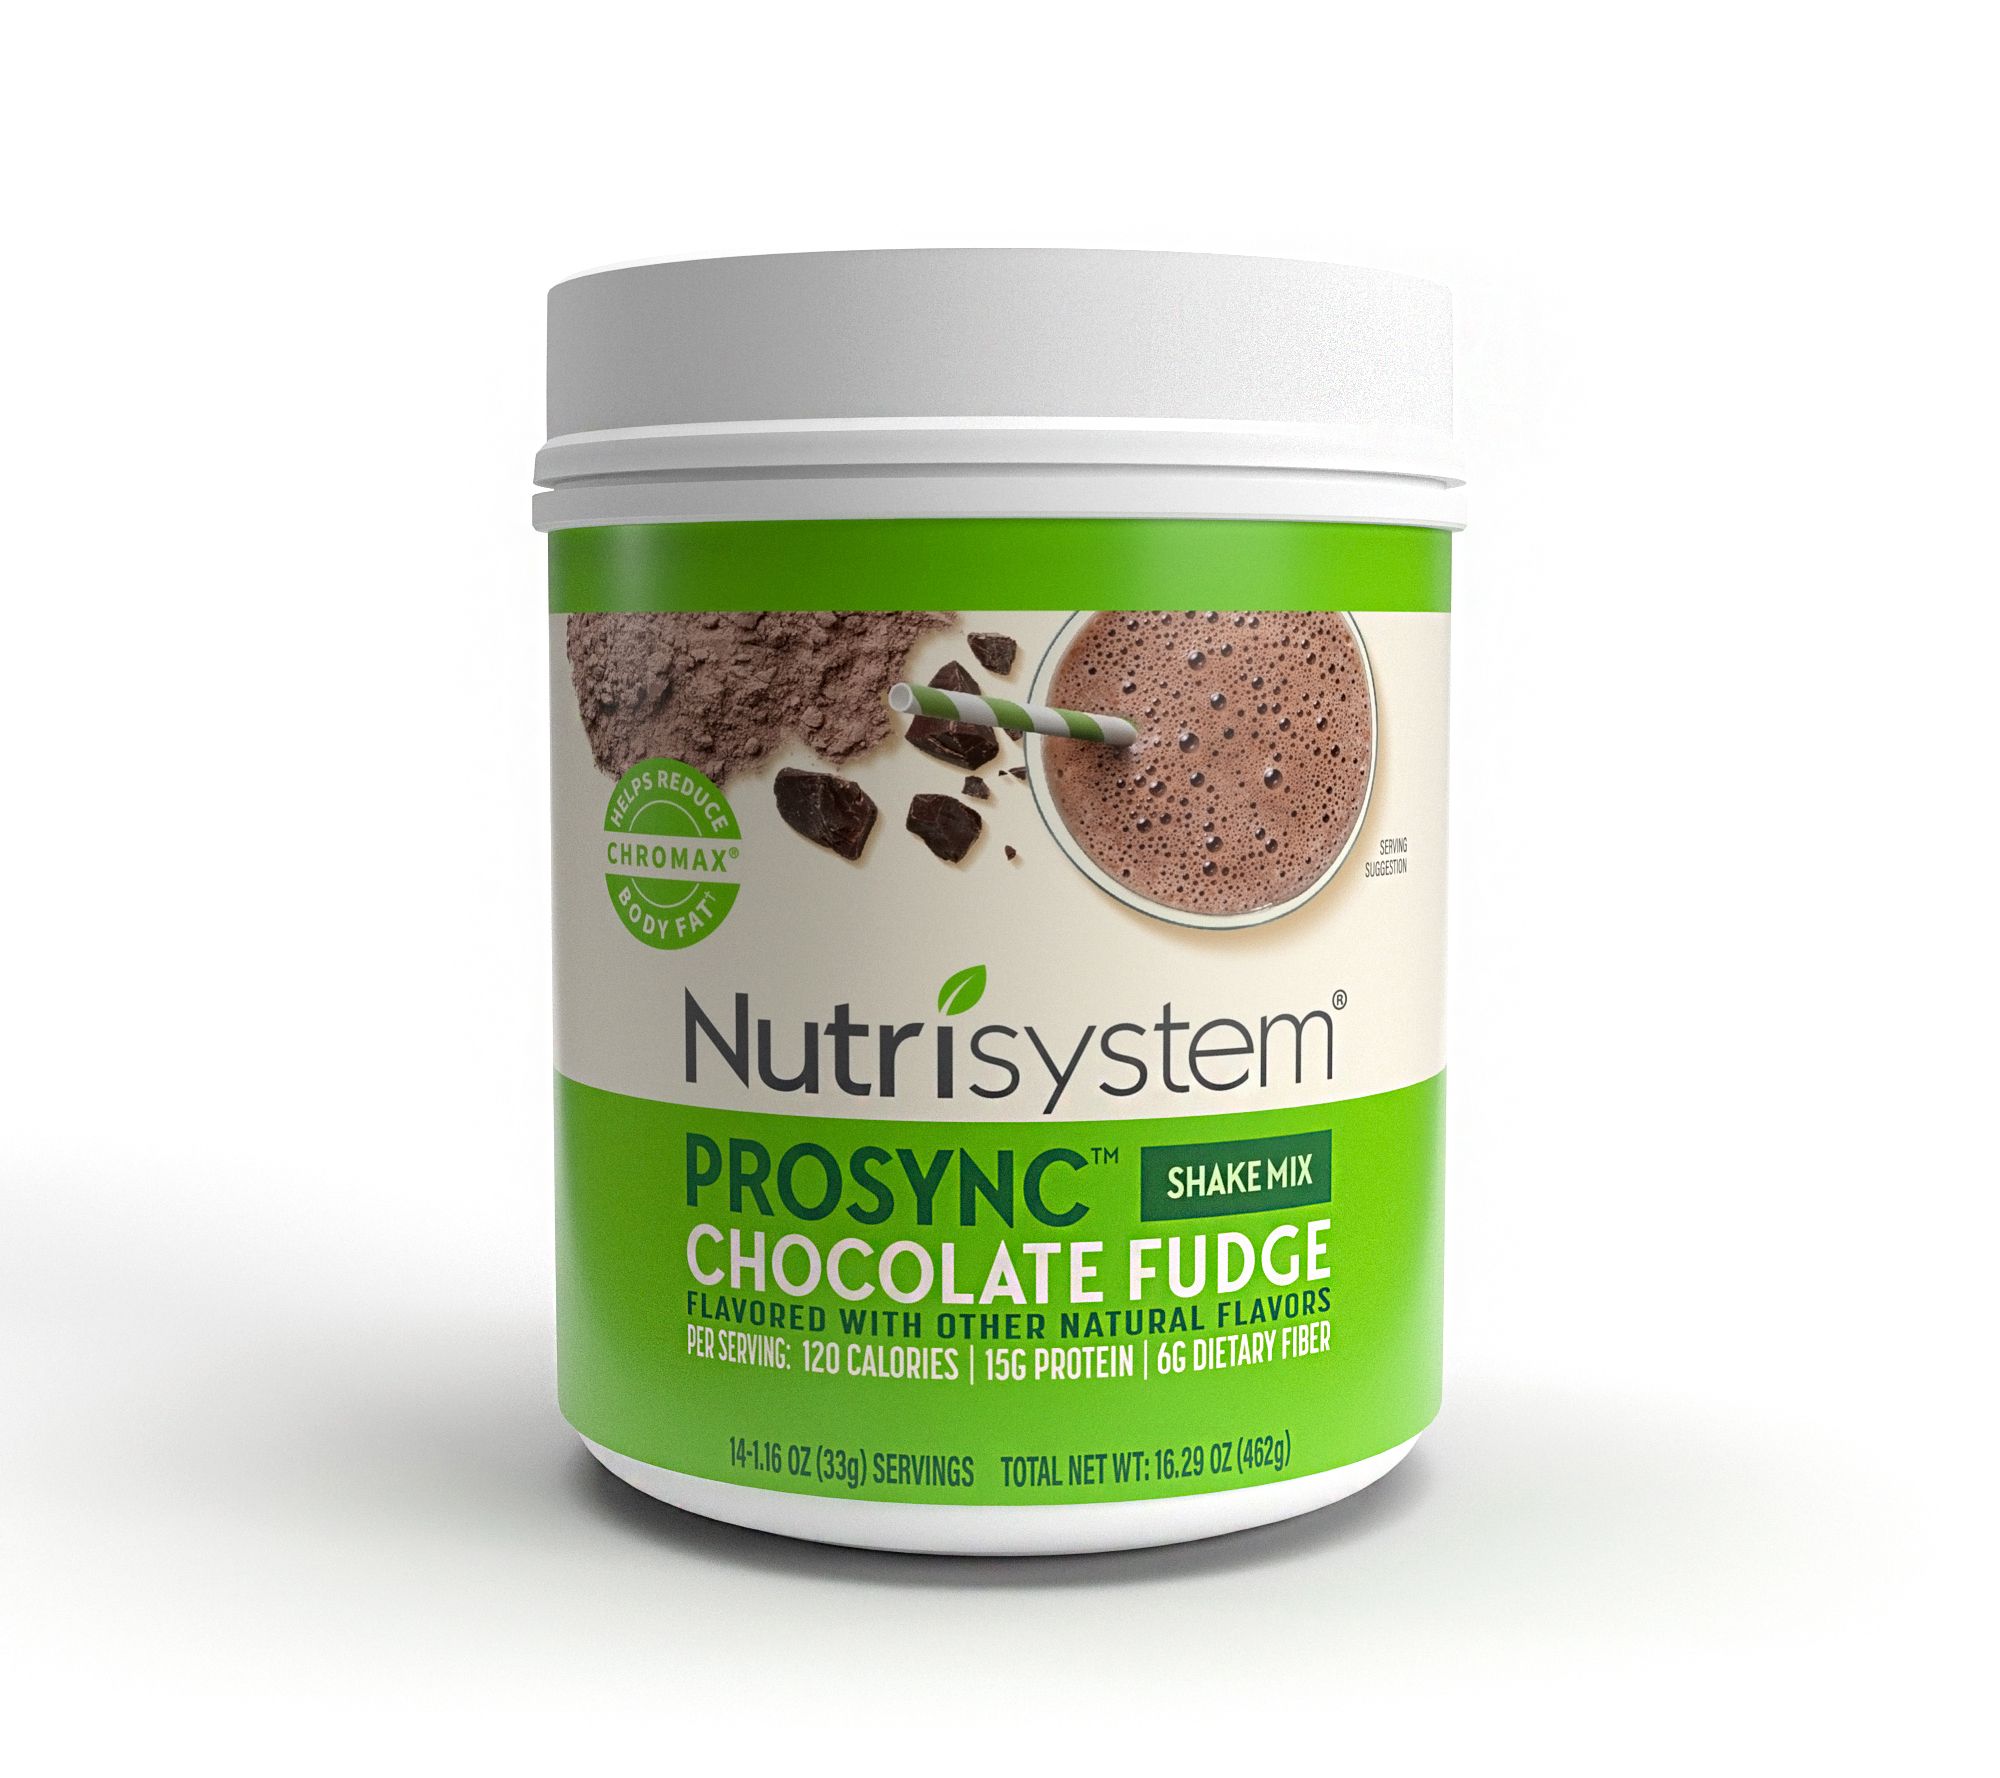 Nutrisystem - Nutrisystem, Nutricrush - Shake Mix, Chocolate, Packets (5  count), Shop